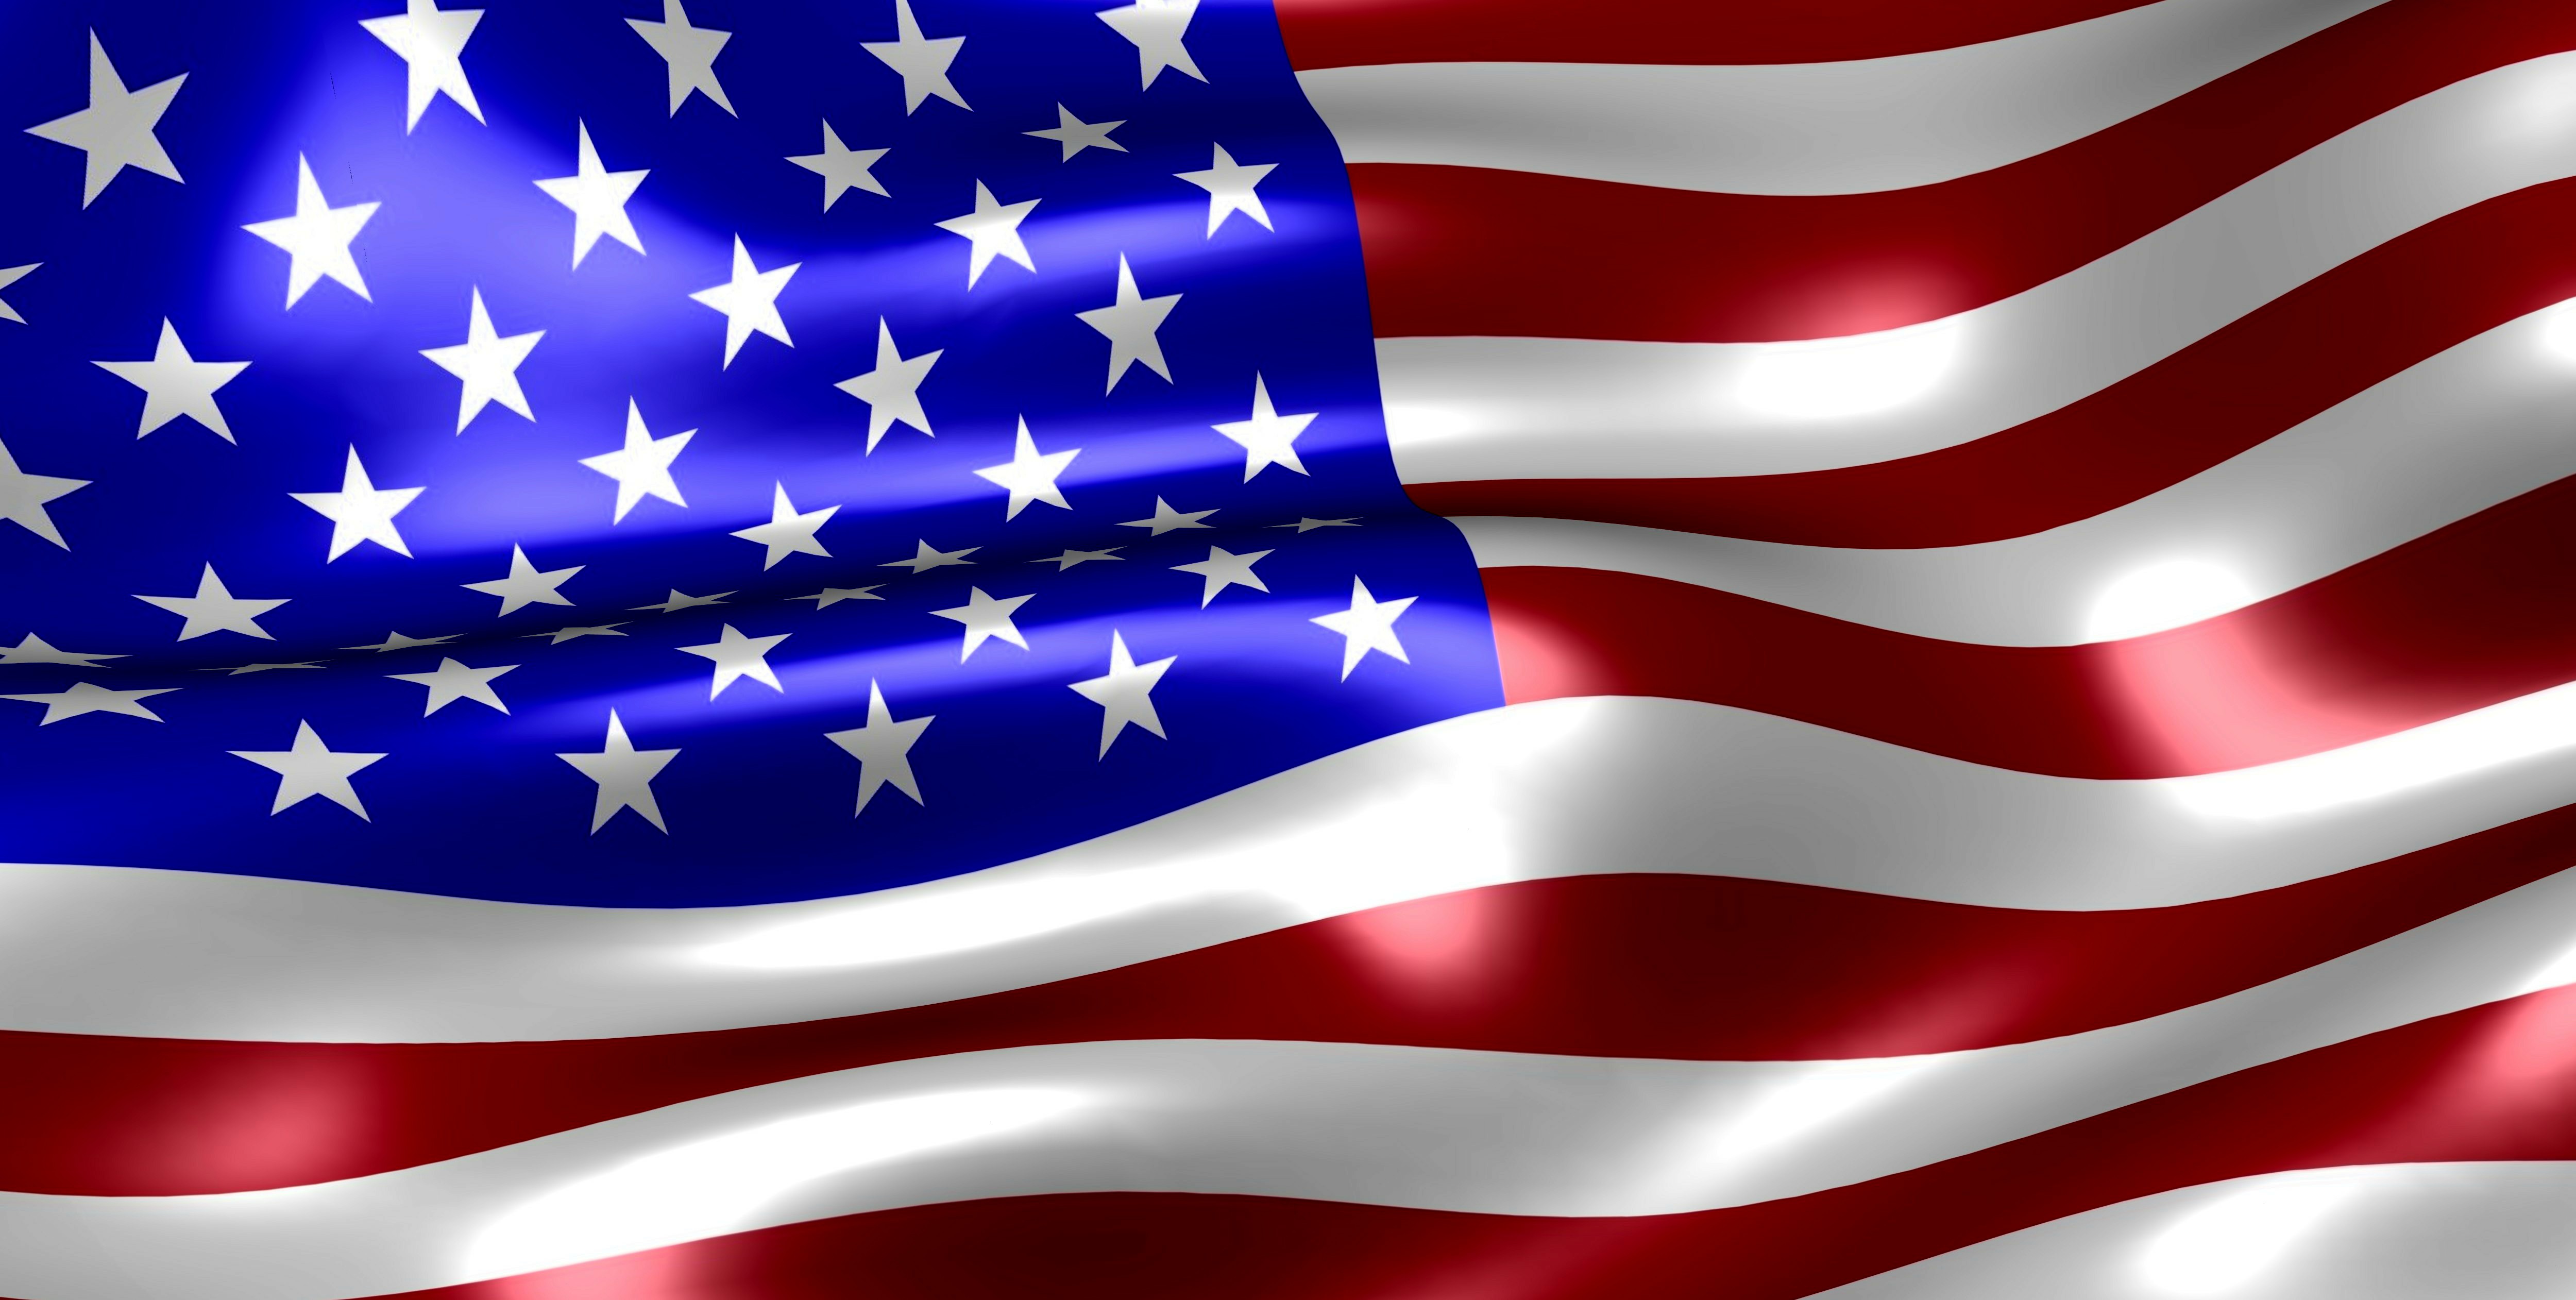 FileVisual of USA Flag stars and stripes FJM88NLjpg   Wikimedia